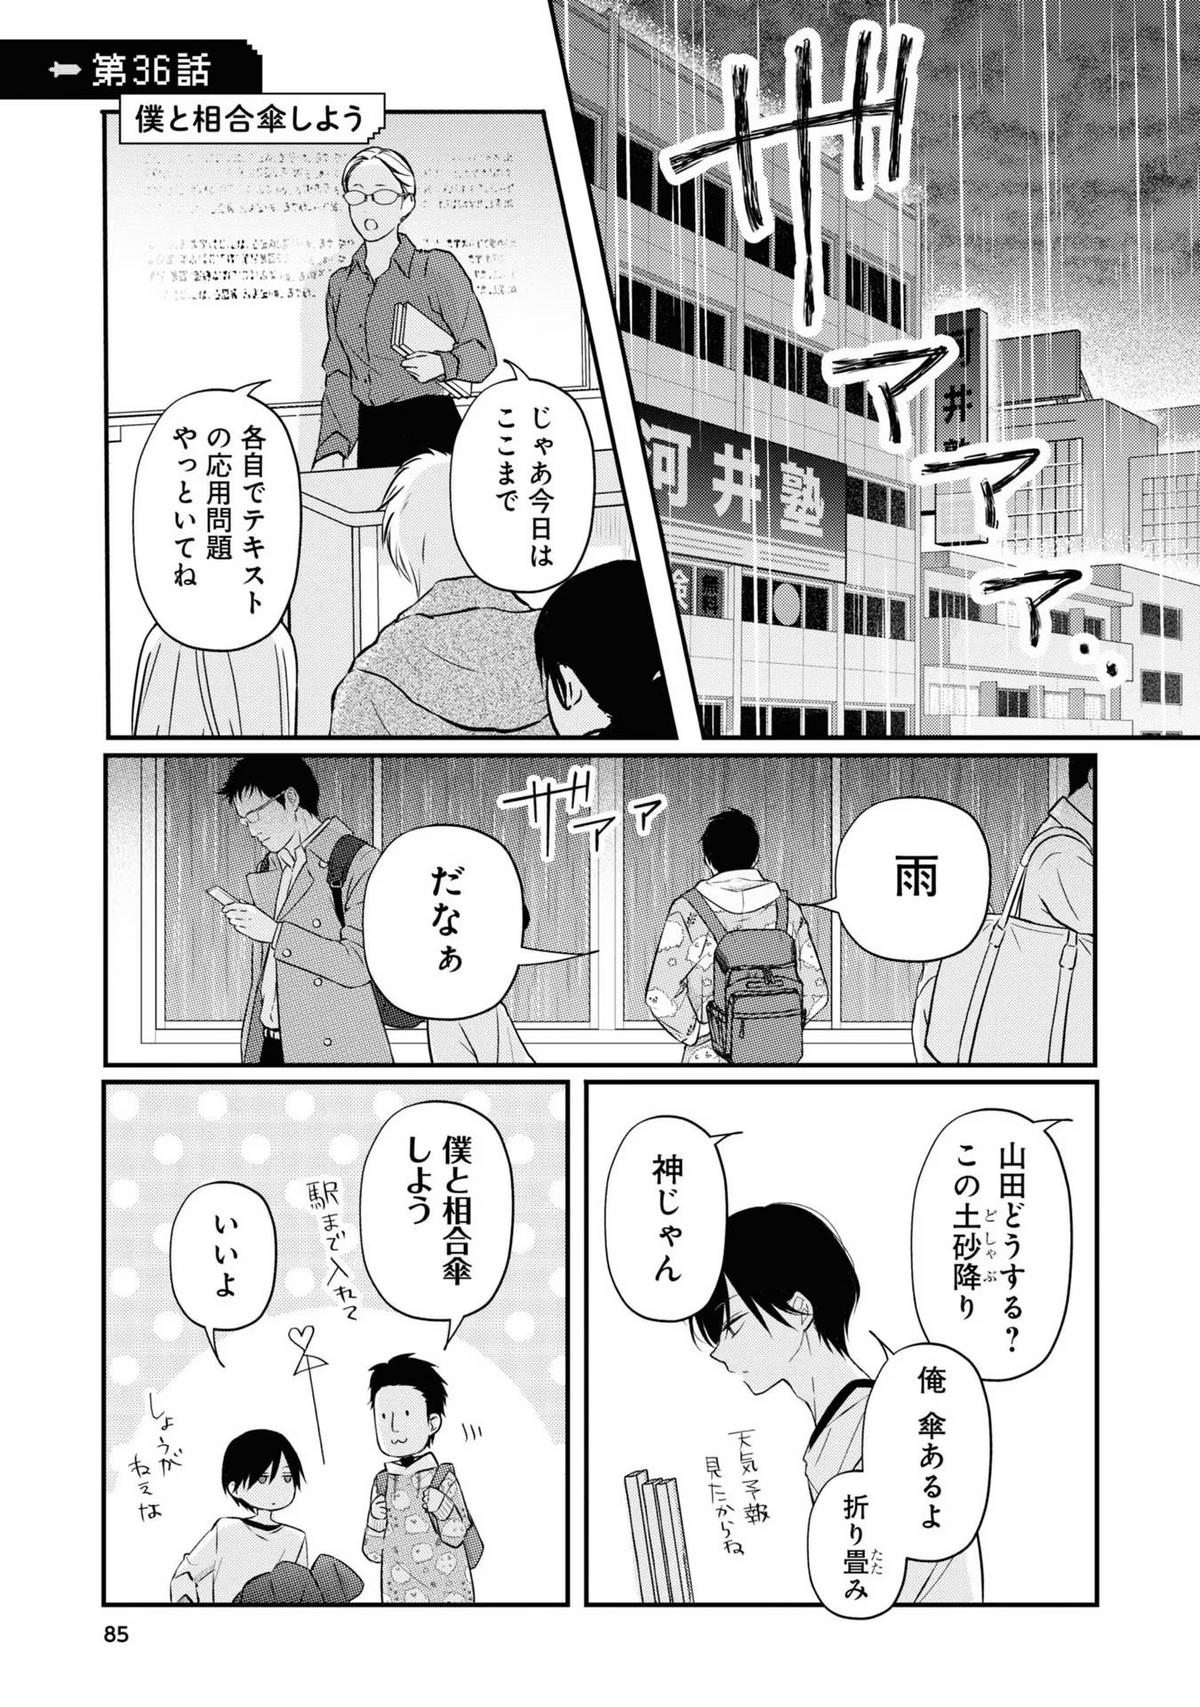 Mangamo Simulpubs Mashiro's 'Loving Yamada at Lv999!' Manga - News - Anime  News Network